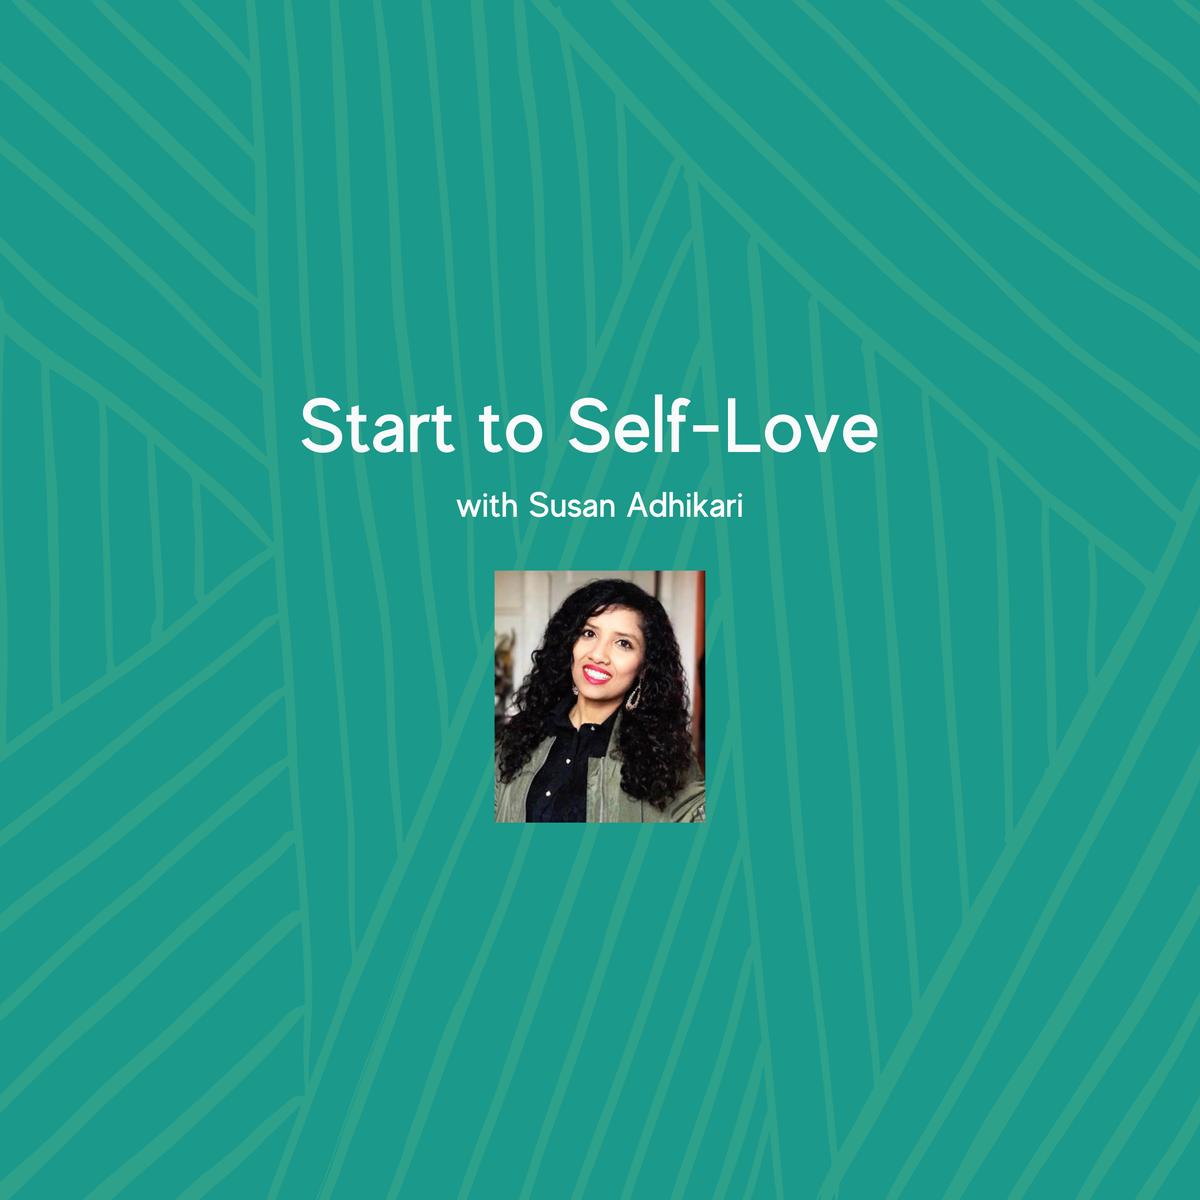 Start to Self-Love with Susan Adhikari